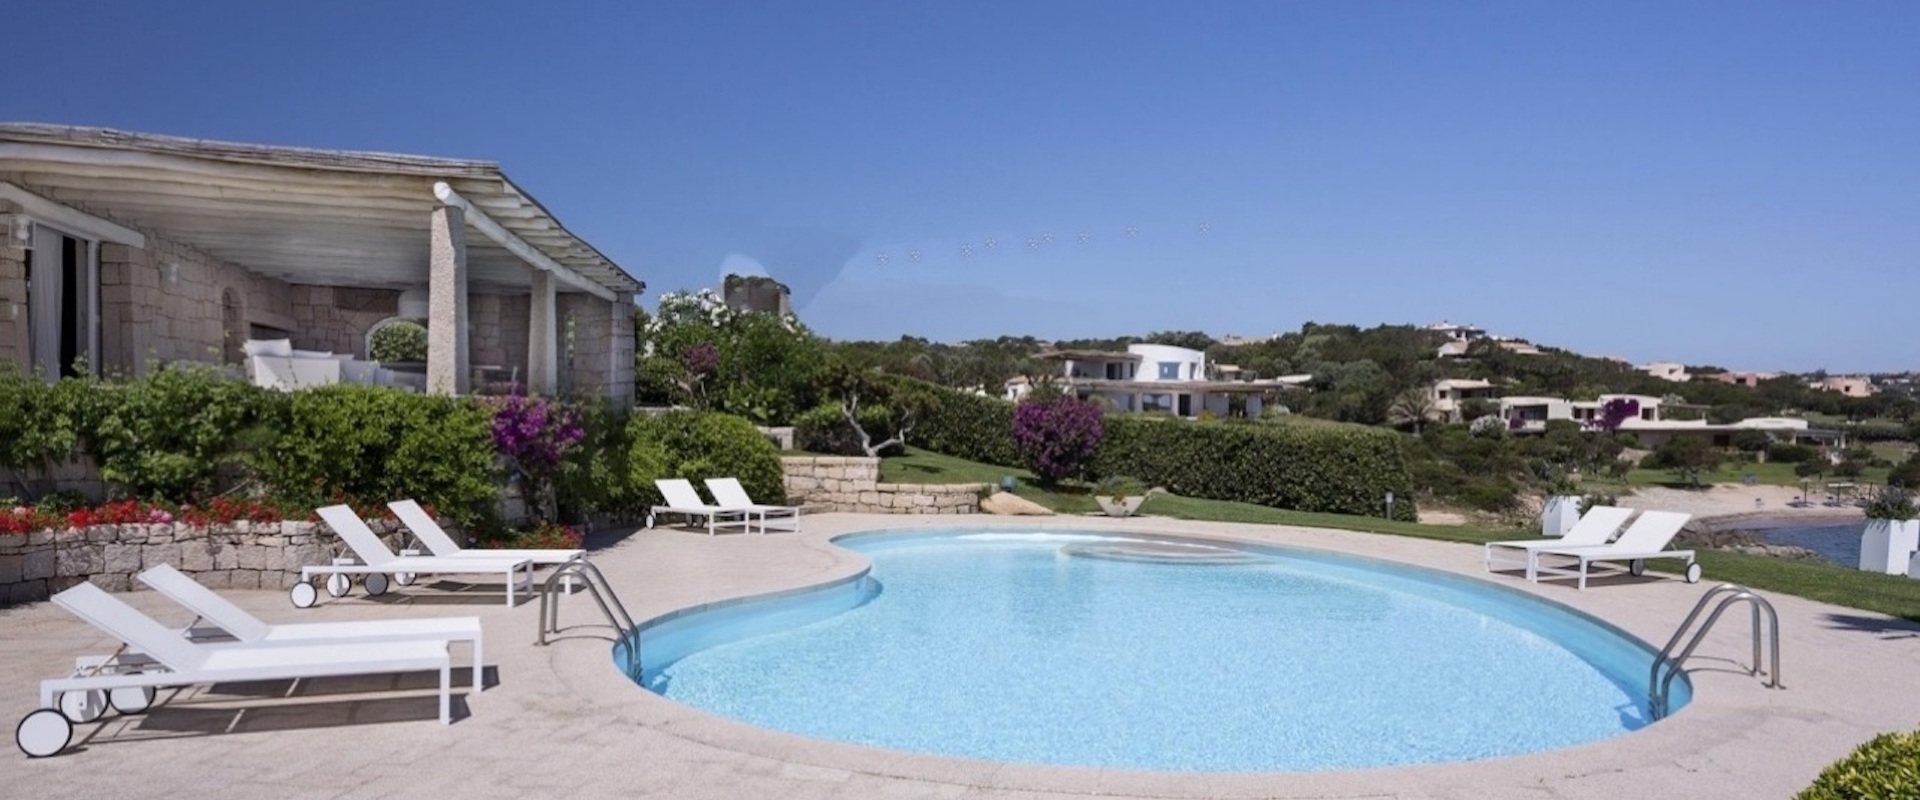 Villa Armonia swimming pool